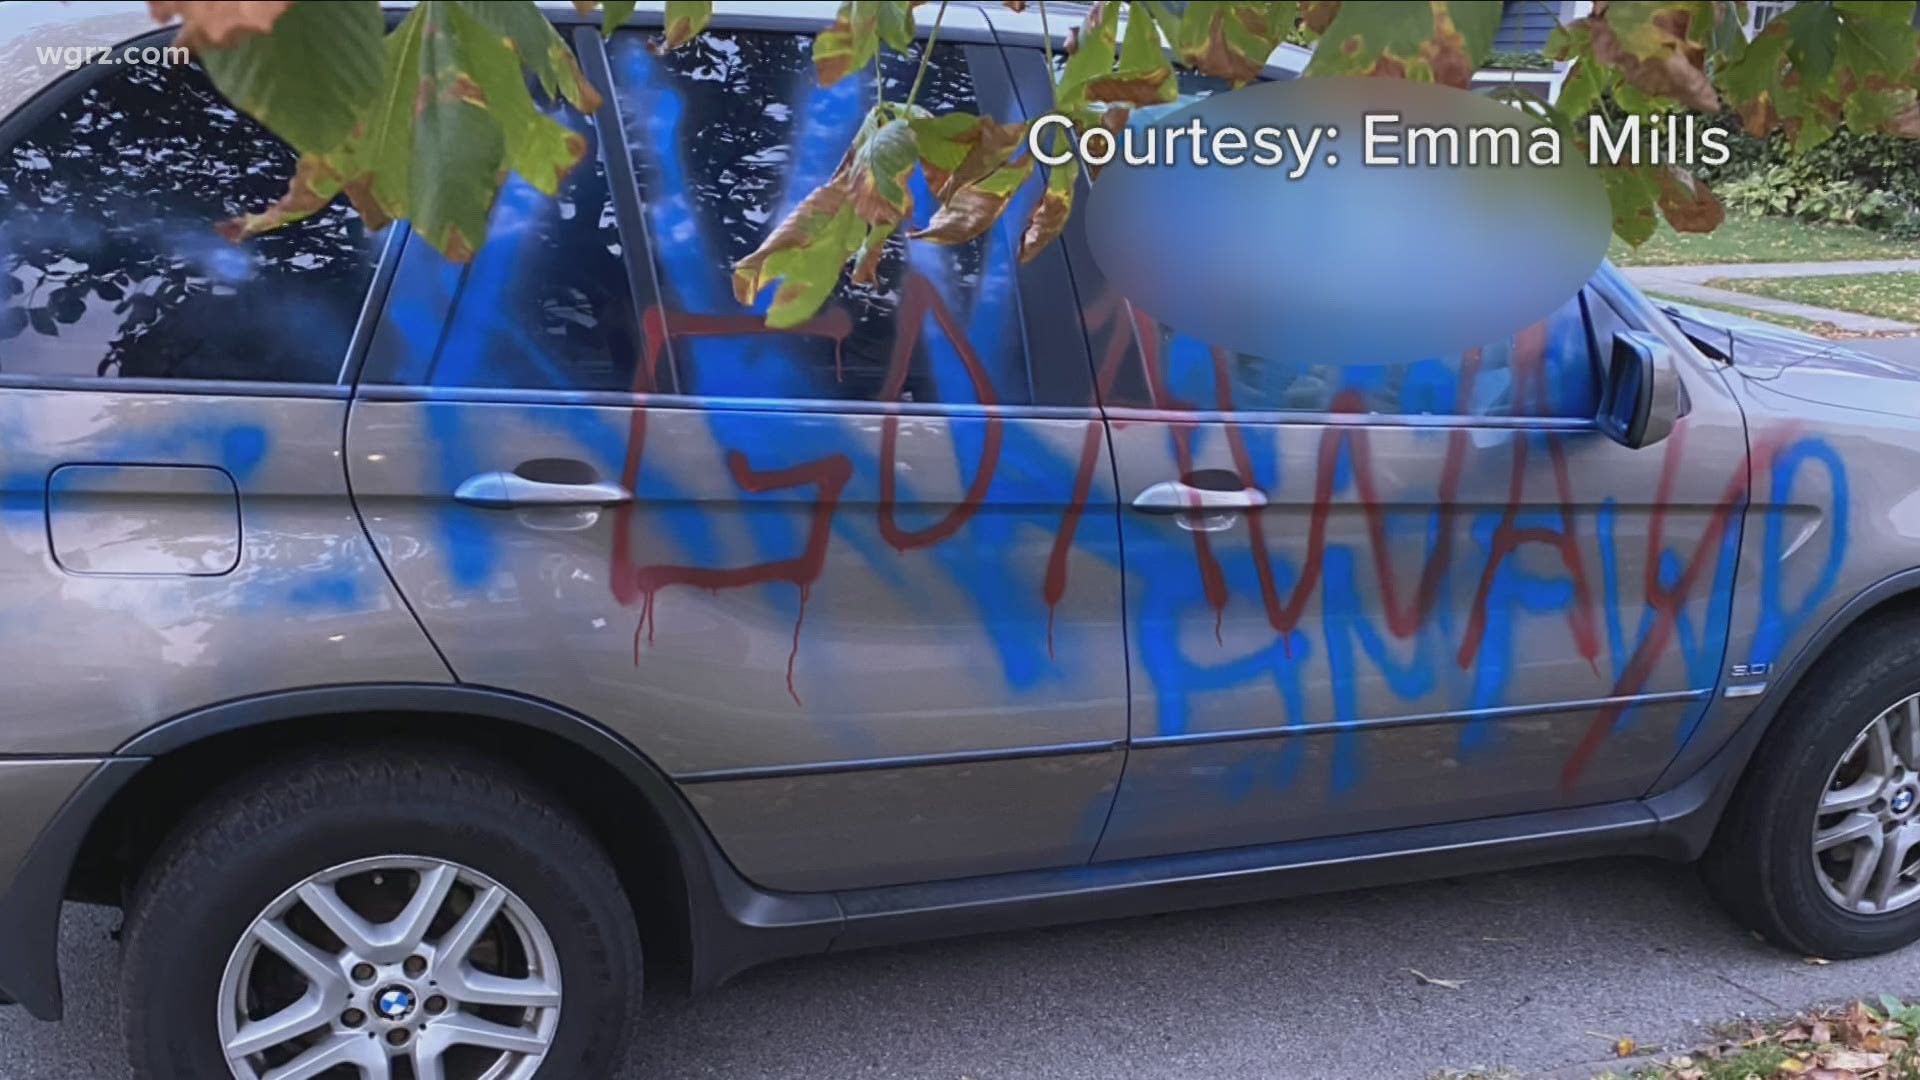 Car vandalized with racist graffiti